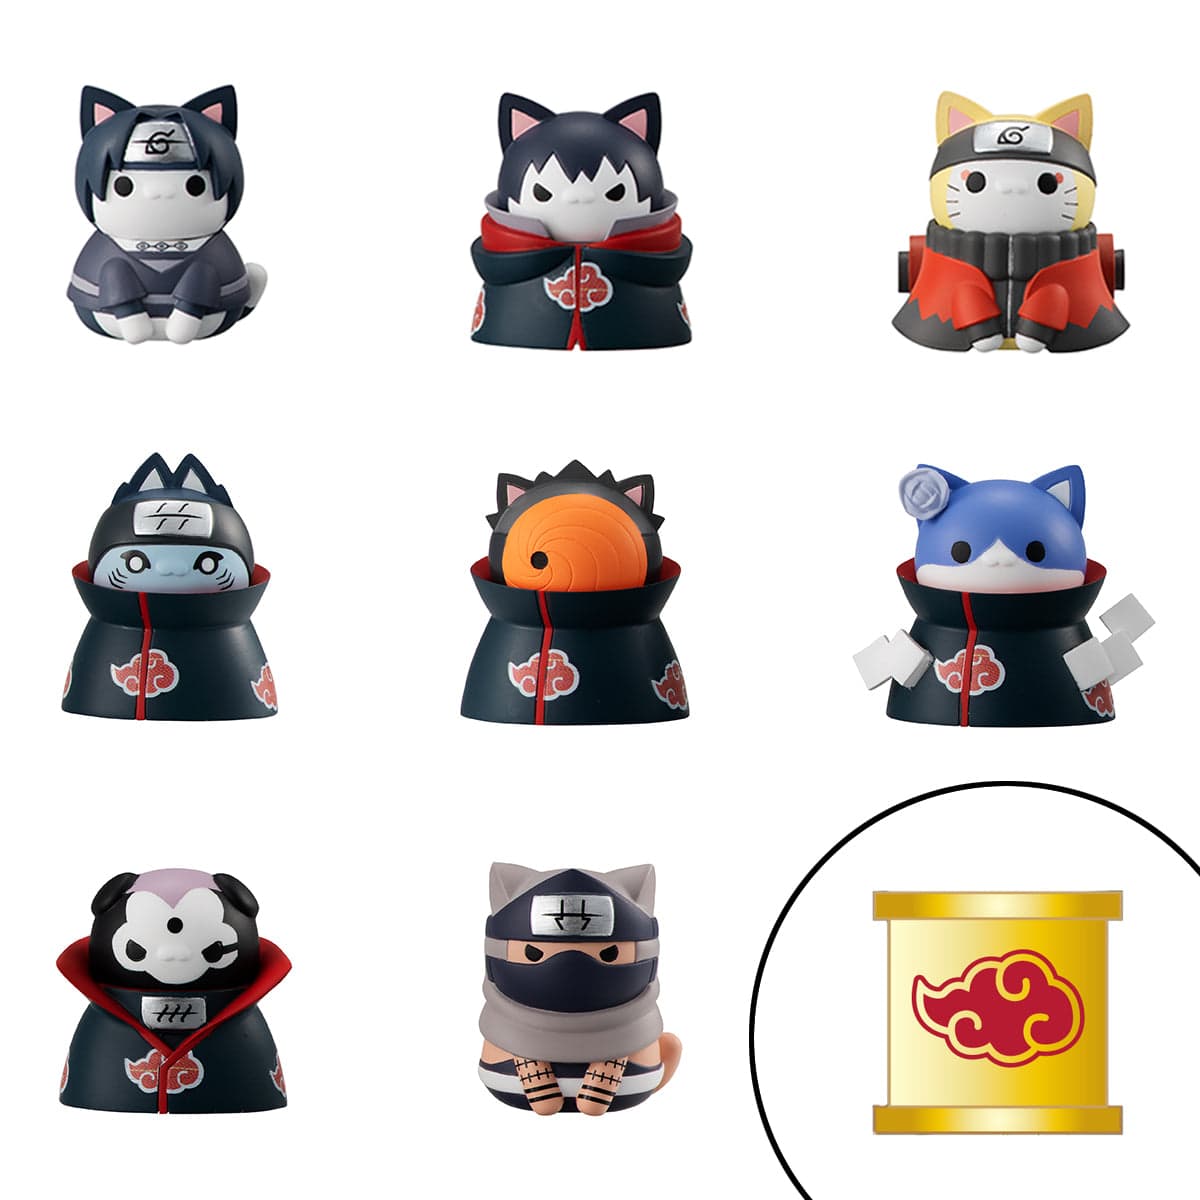 Megahouse MEGA CAT PROJECT - Nyaruto! - Defense battle of village of Konoha! Set 【with gift - Gold “Akatsuki” can mascot】